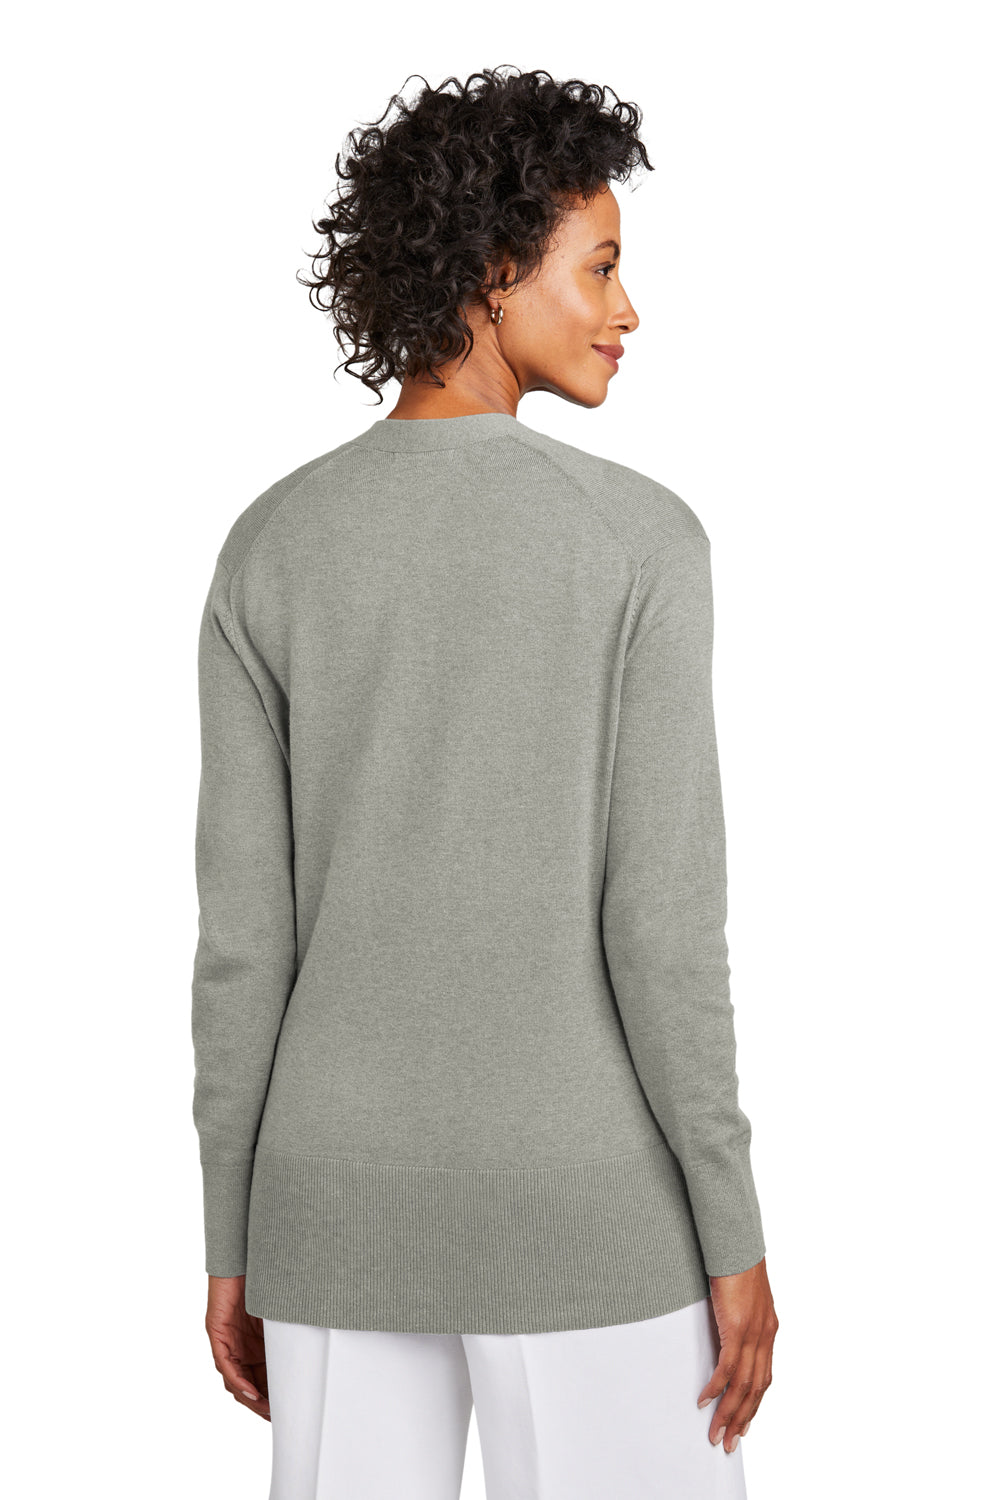 Brooks Brothers Womens Long Sleeeve Cardigan Sweater Heather Light Shadow Grey Model Back